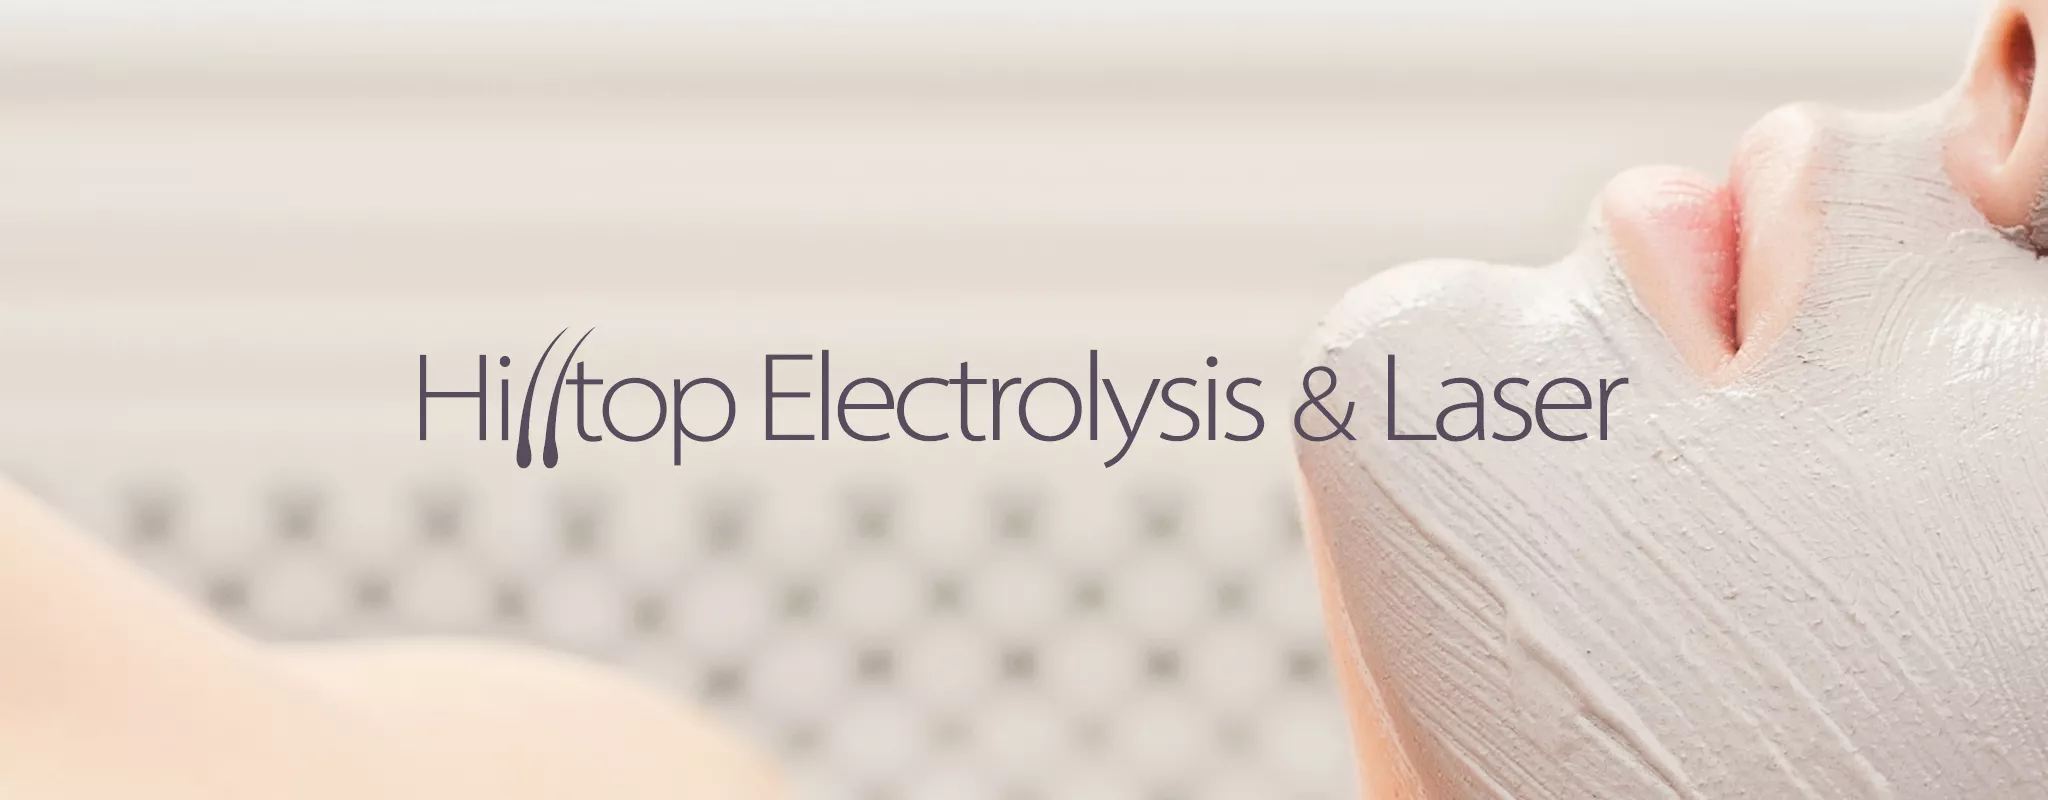 Hillltop Electrolysis and Laser